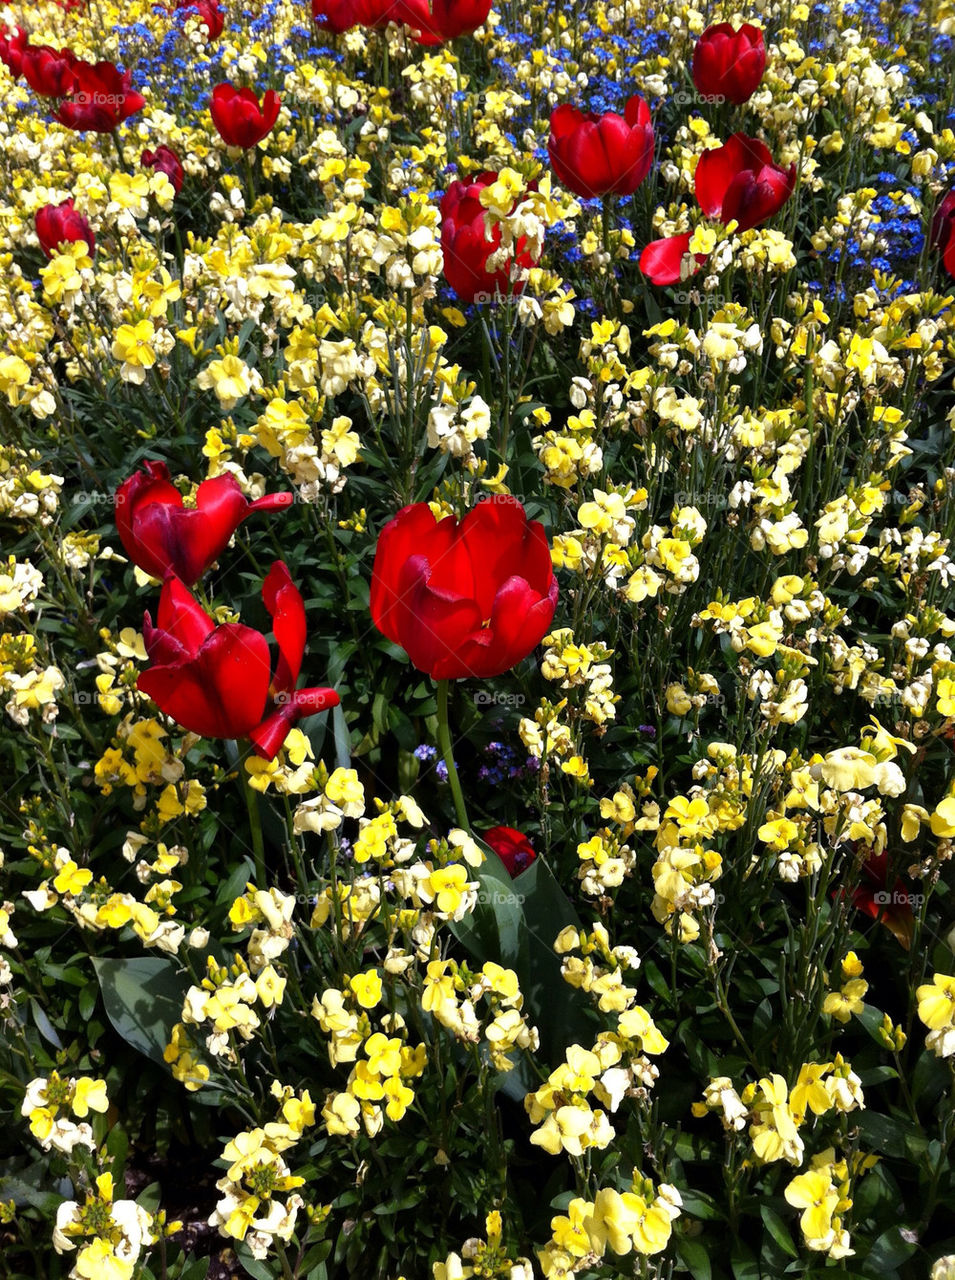 london flowers garden yellow by yhazman21